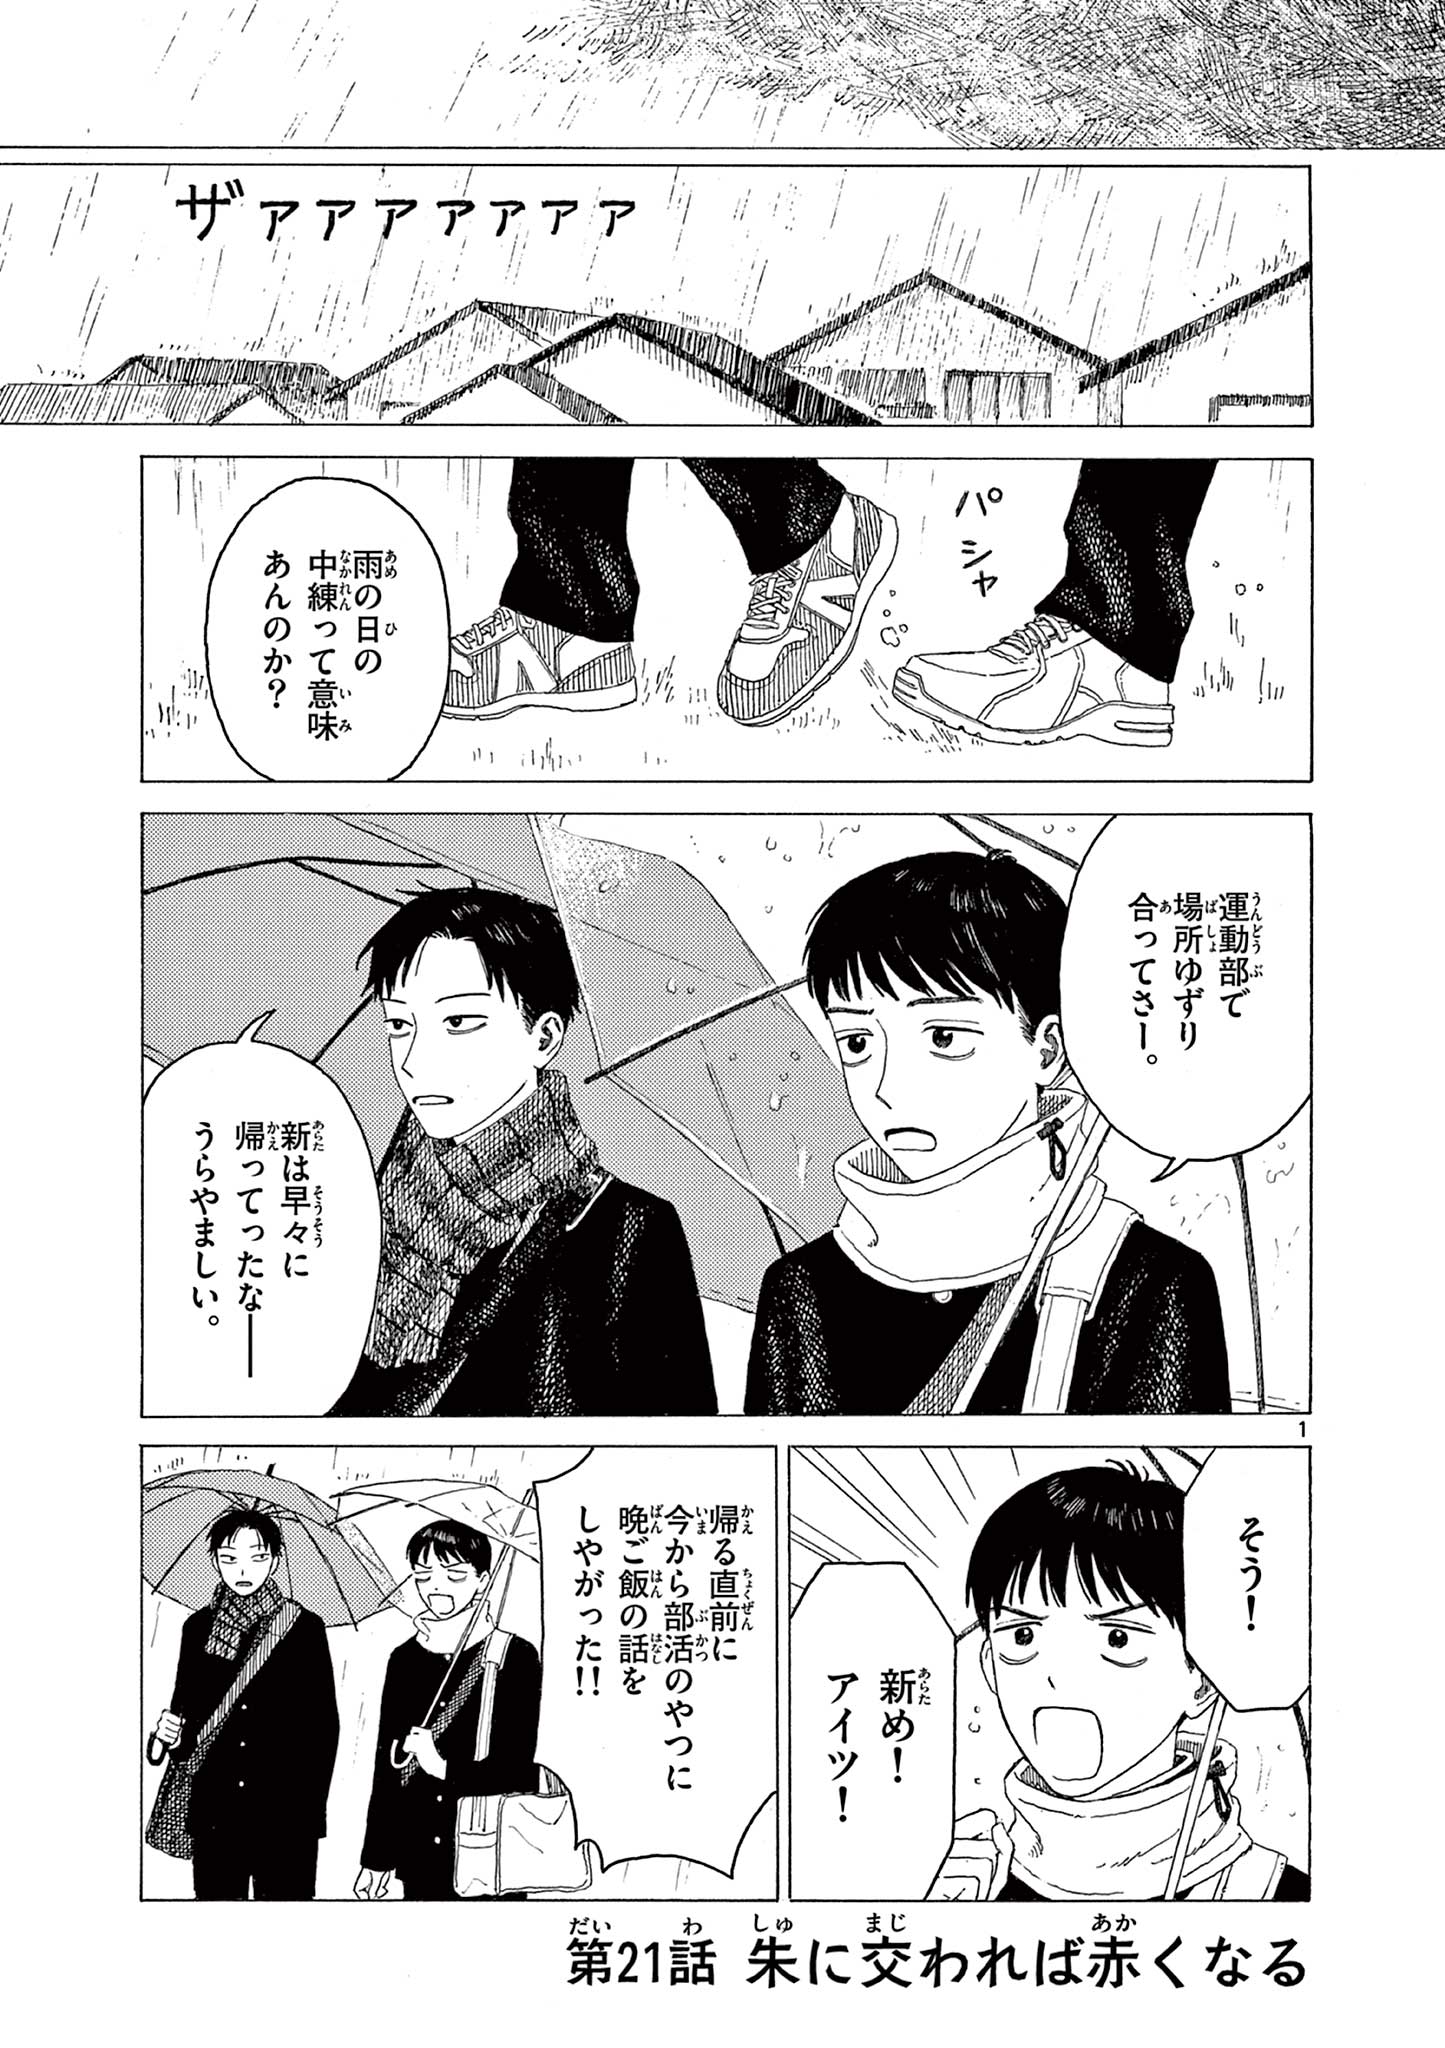 Kujima Utaeba Ie Hororo - Chapter 21 - Page 1